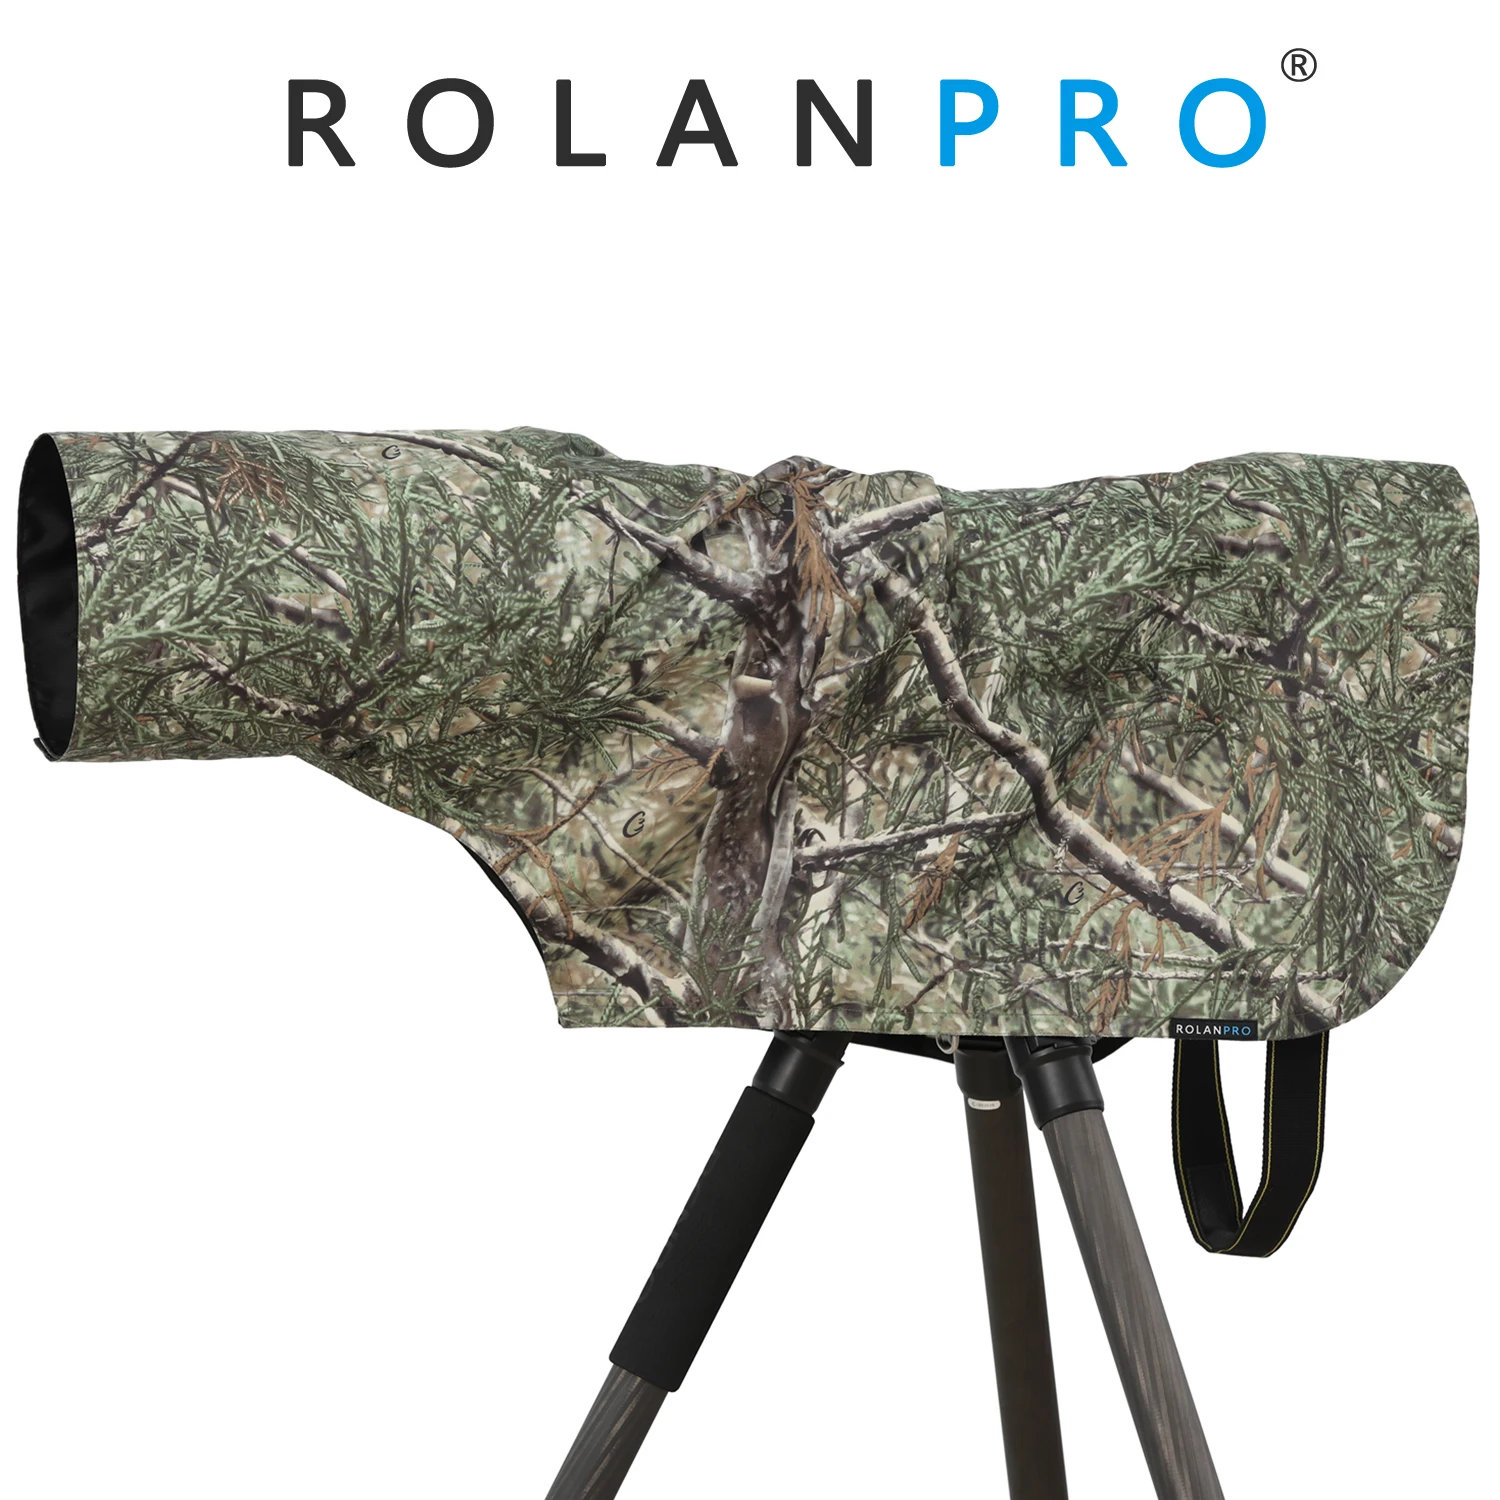 ROLANPRO New Color Rain Cover Raincoat for Telephoto Lens Rain Cover/Lens Raincoat Army Green Camo Guns Clothing L M S XS XXS